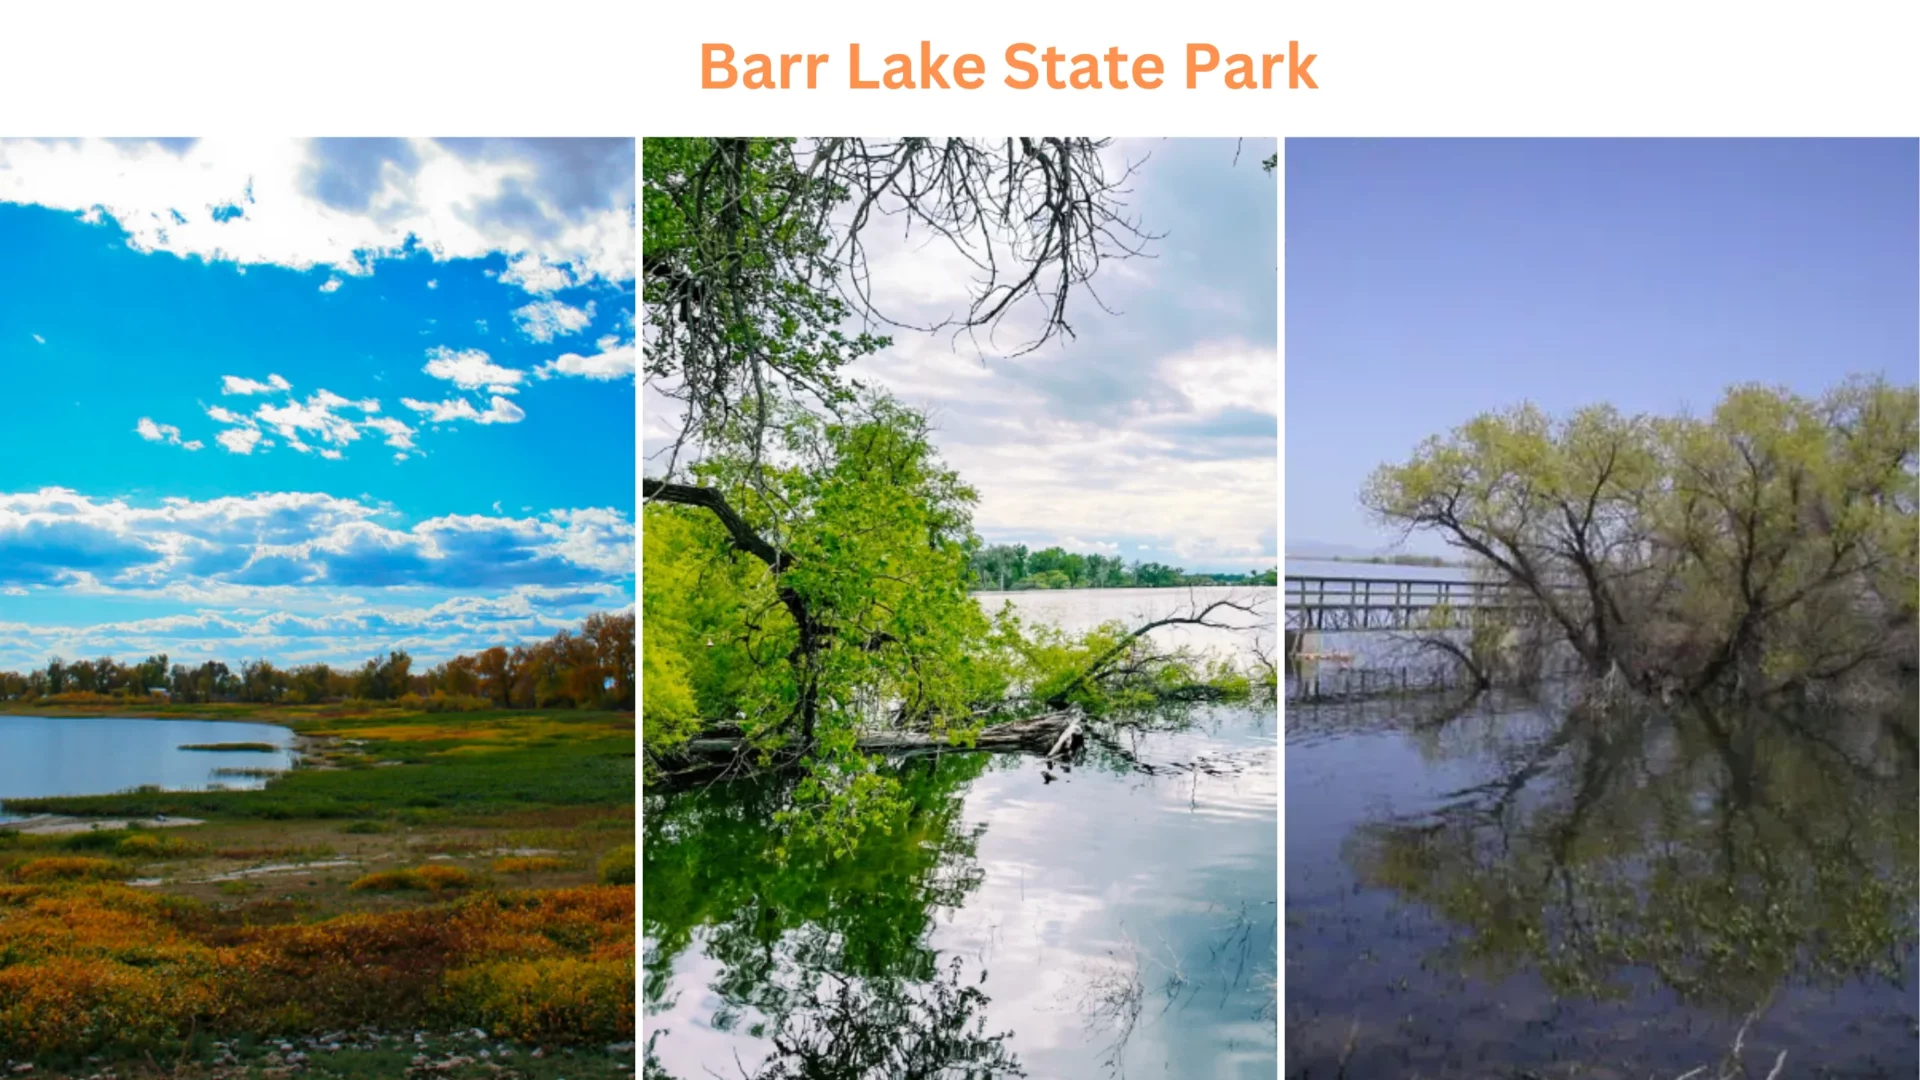 Barr Lake State Park